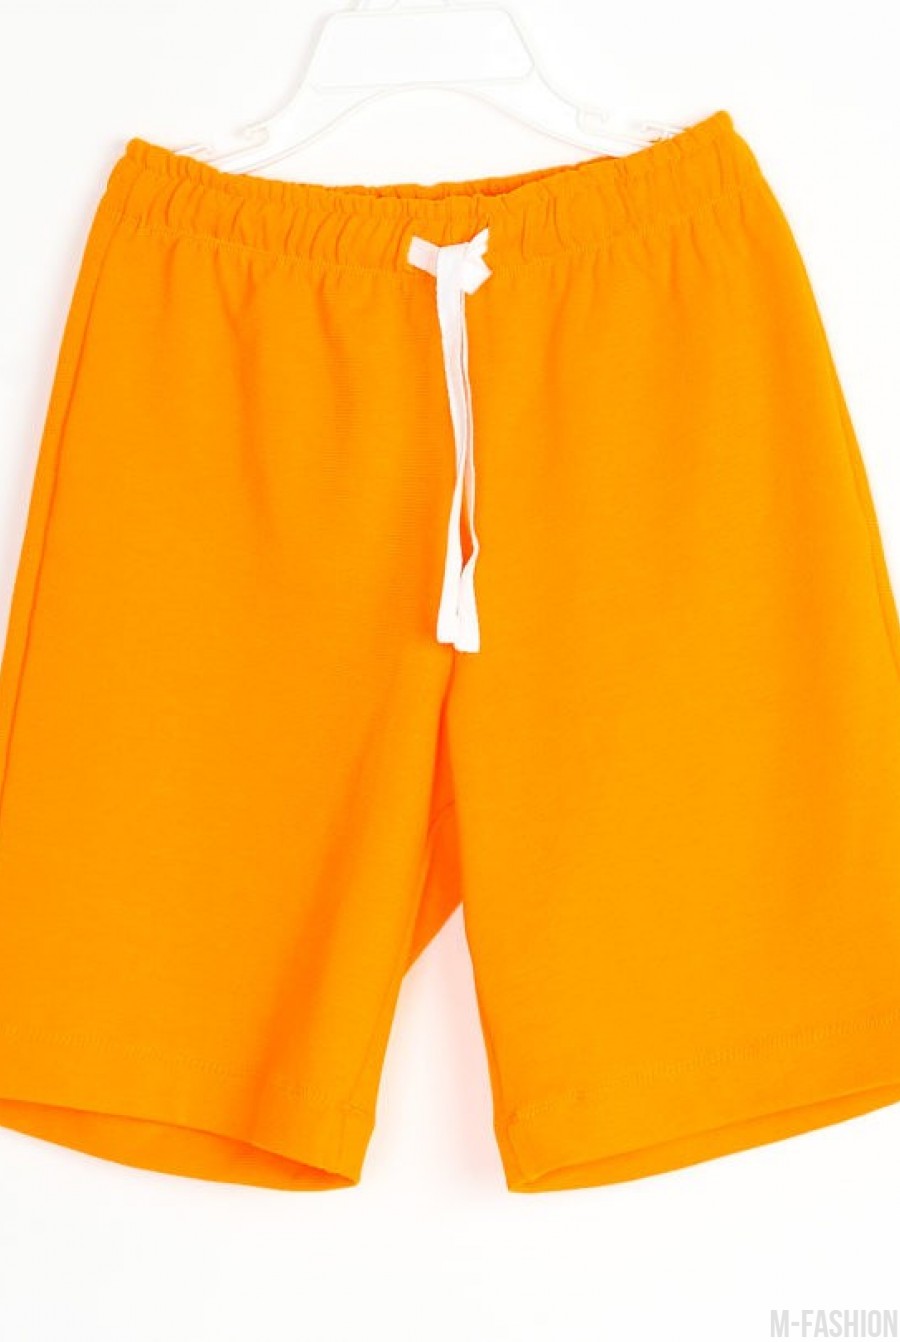 Шорты летние оранжевого цвета со шнурком на талии - Фото 1